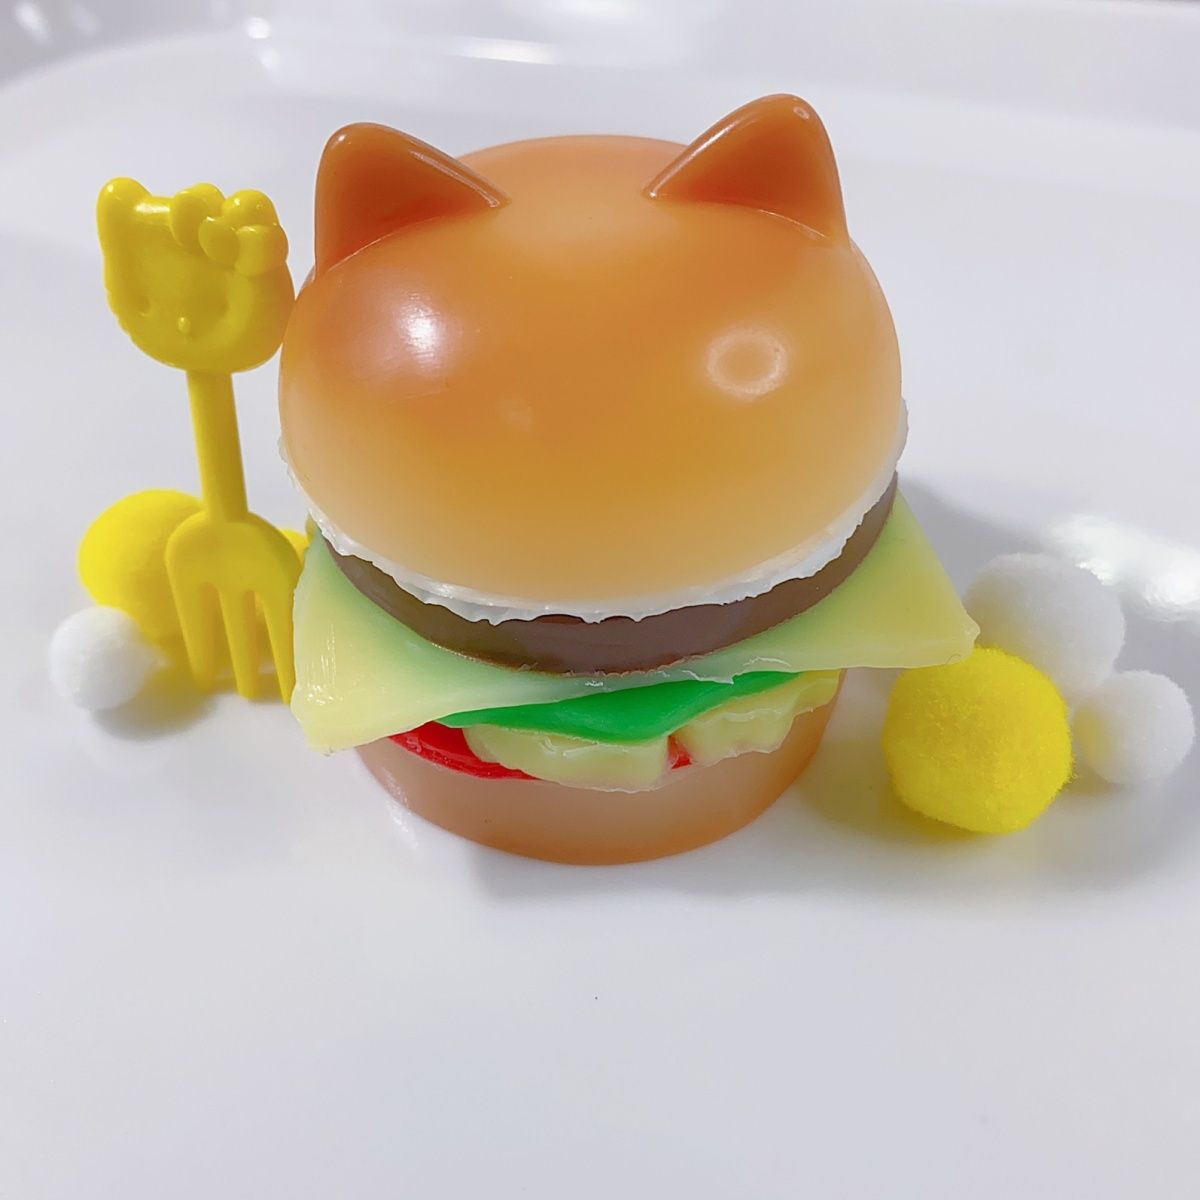 Handmade Silicone Hamburger Stress Relief Squishy Toy